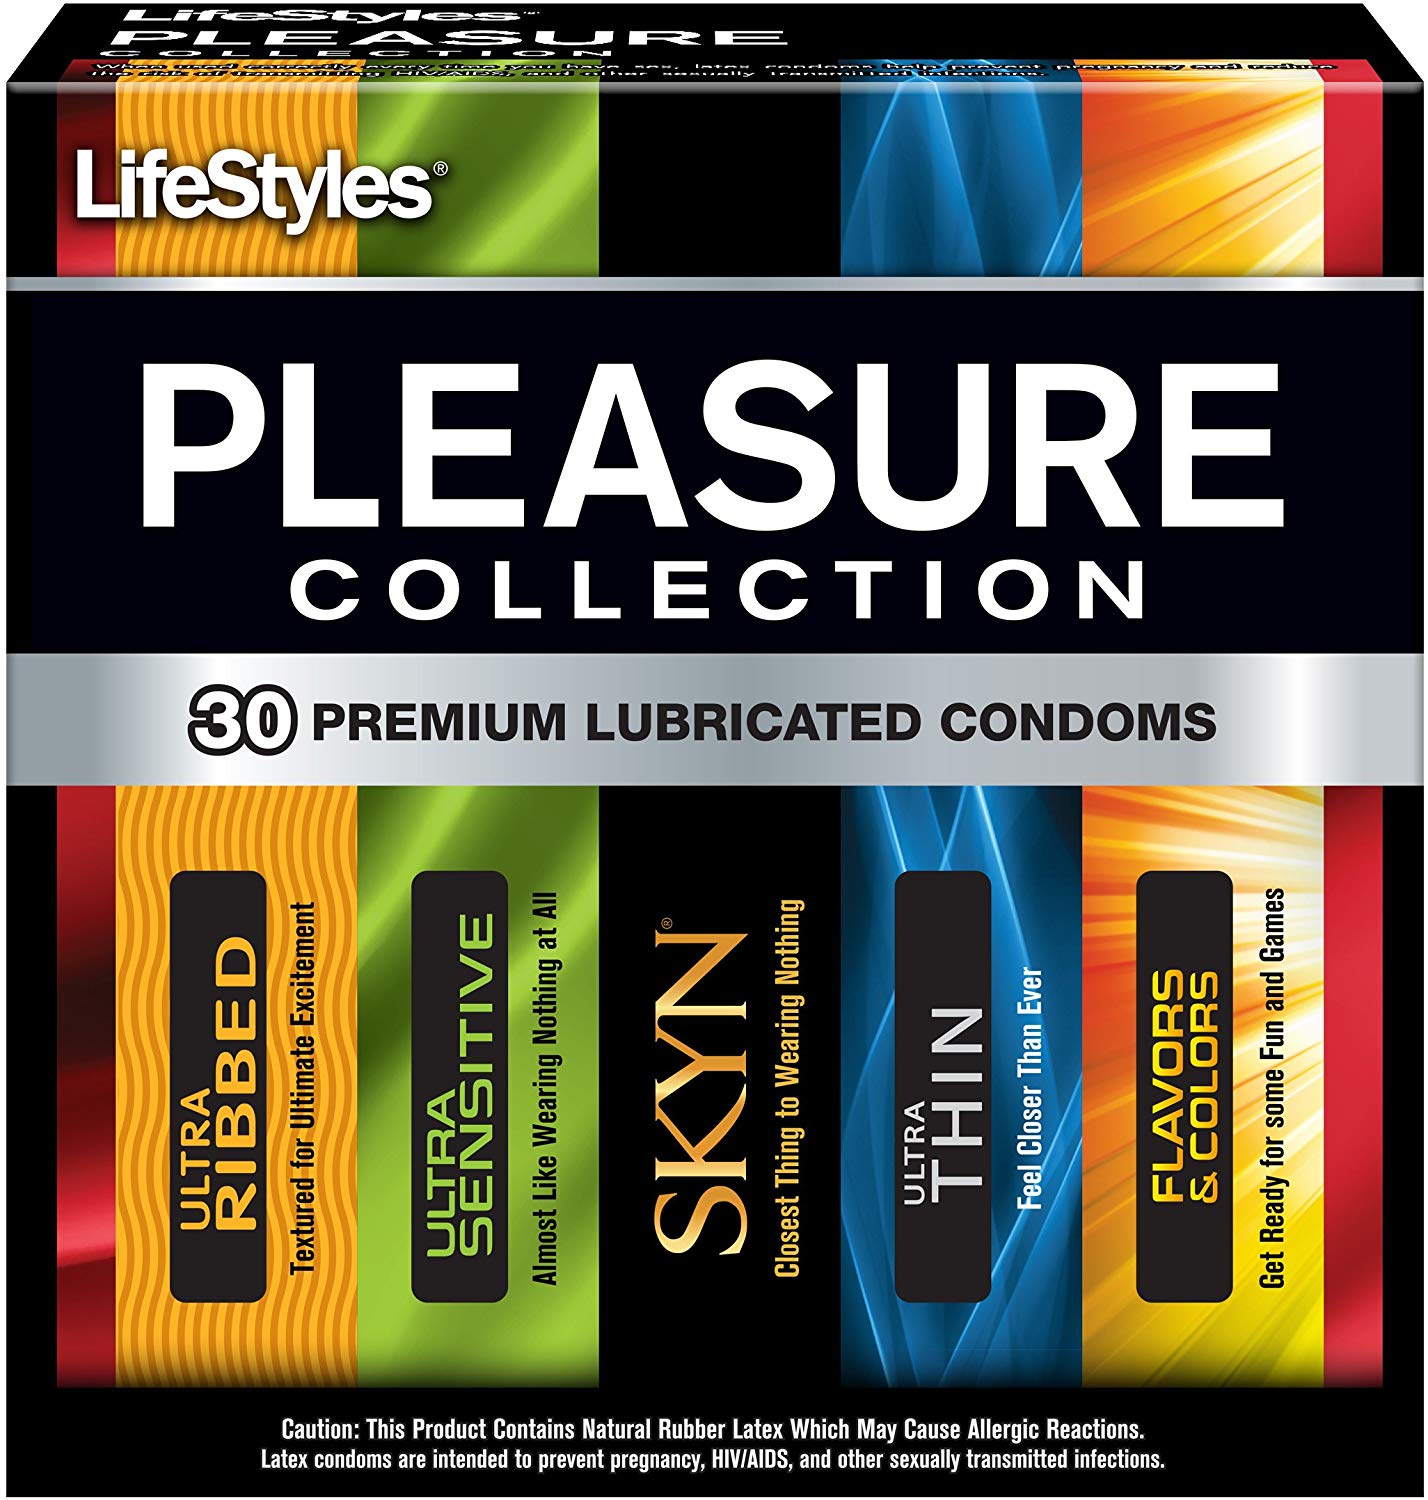 Lifestyles Pleasure Collection